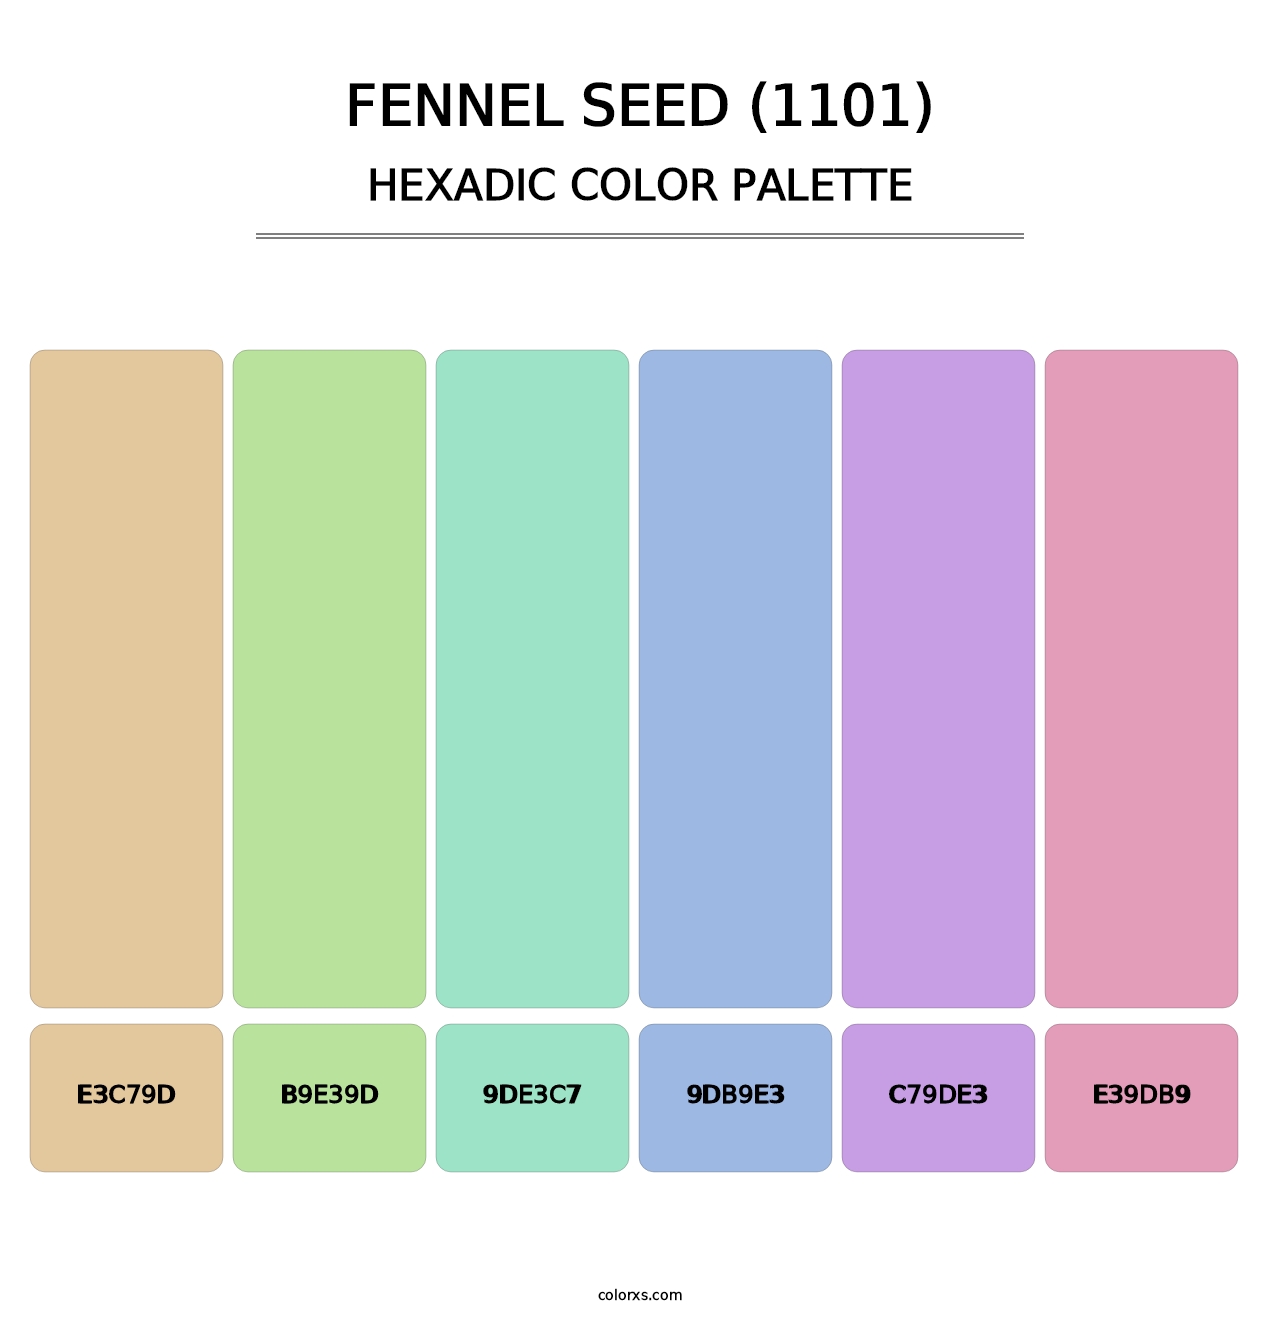 Fennel Seed (1101) - Hexadic Color Palette